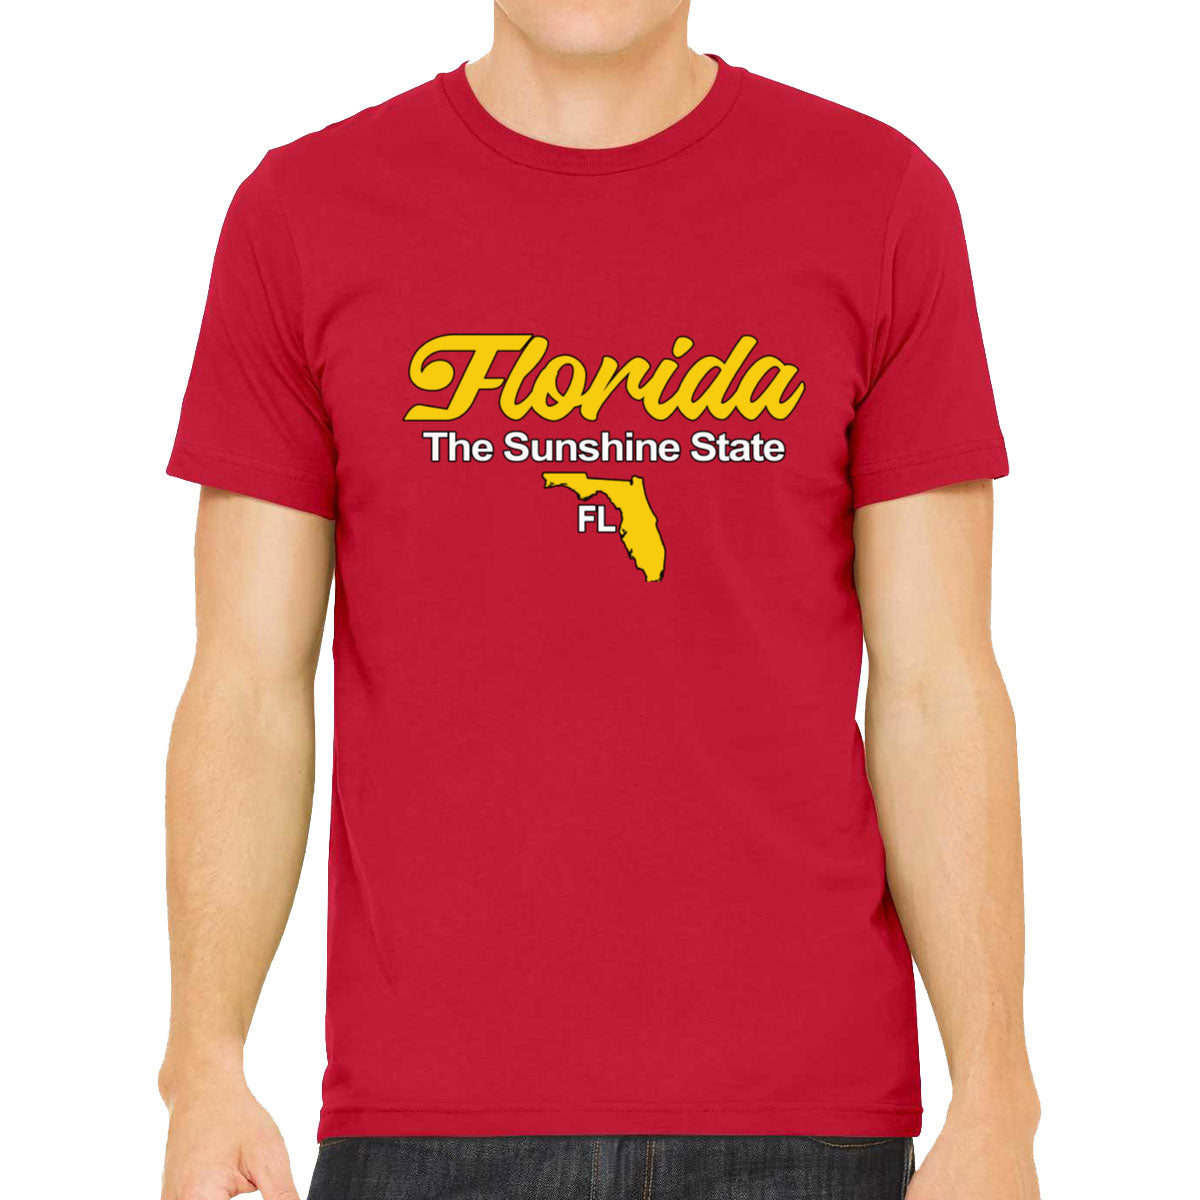 Florida The Sunshine State Men's T-shirt